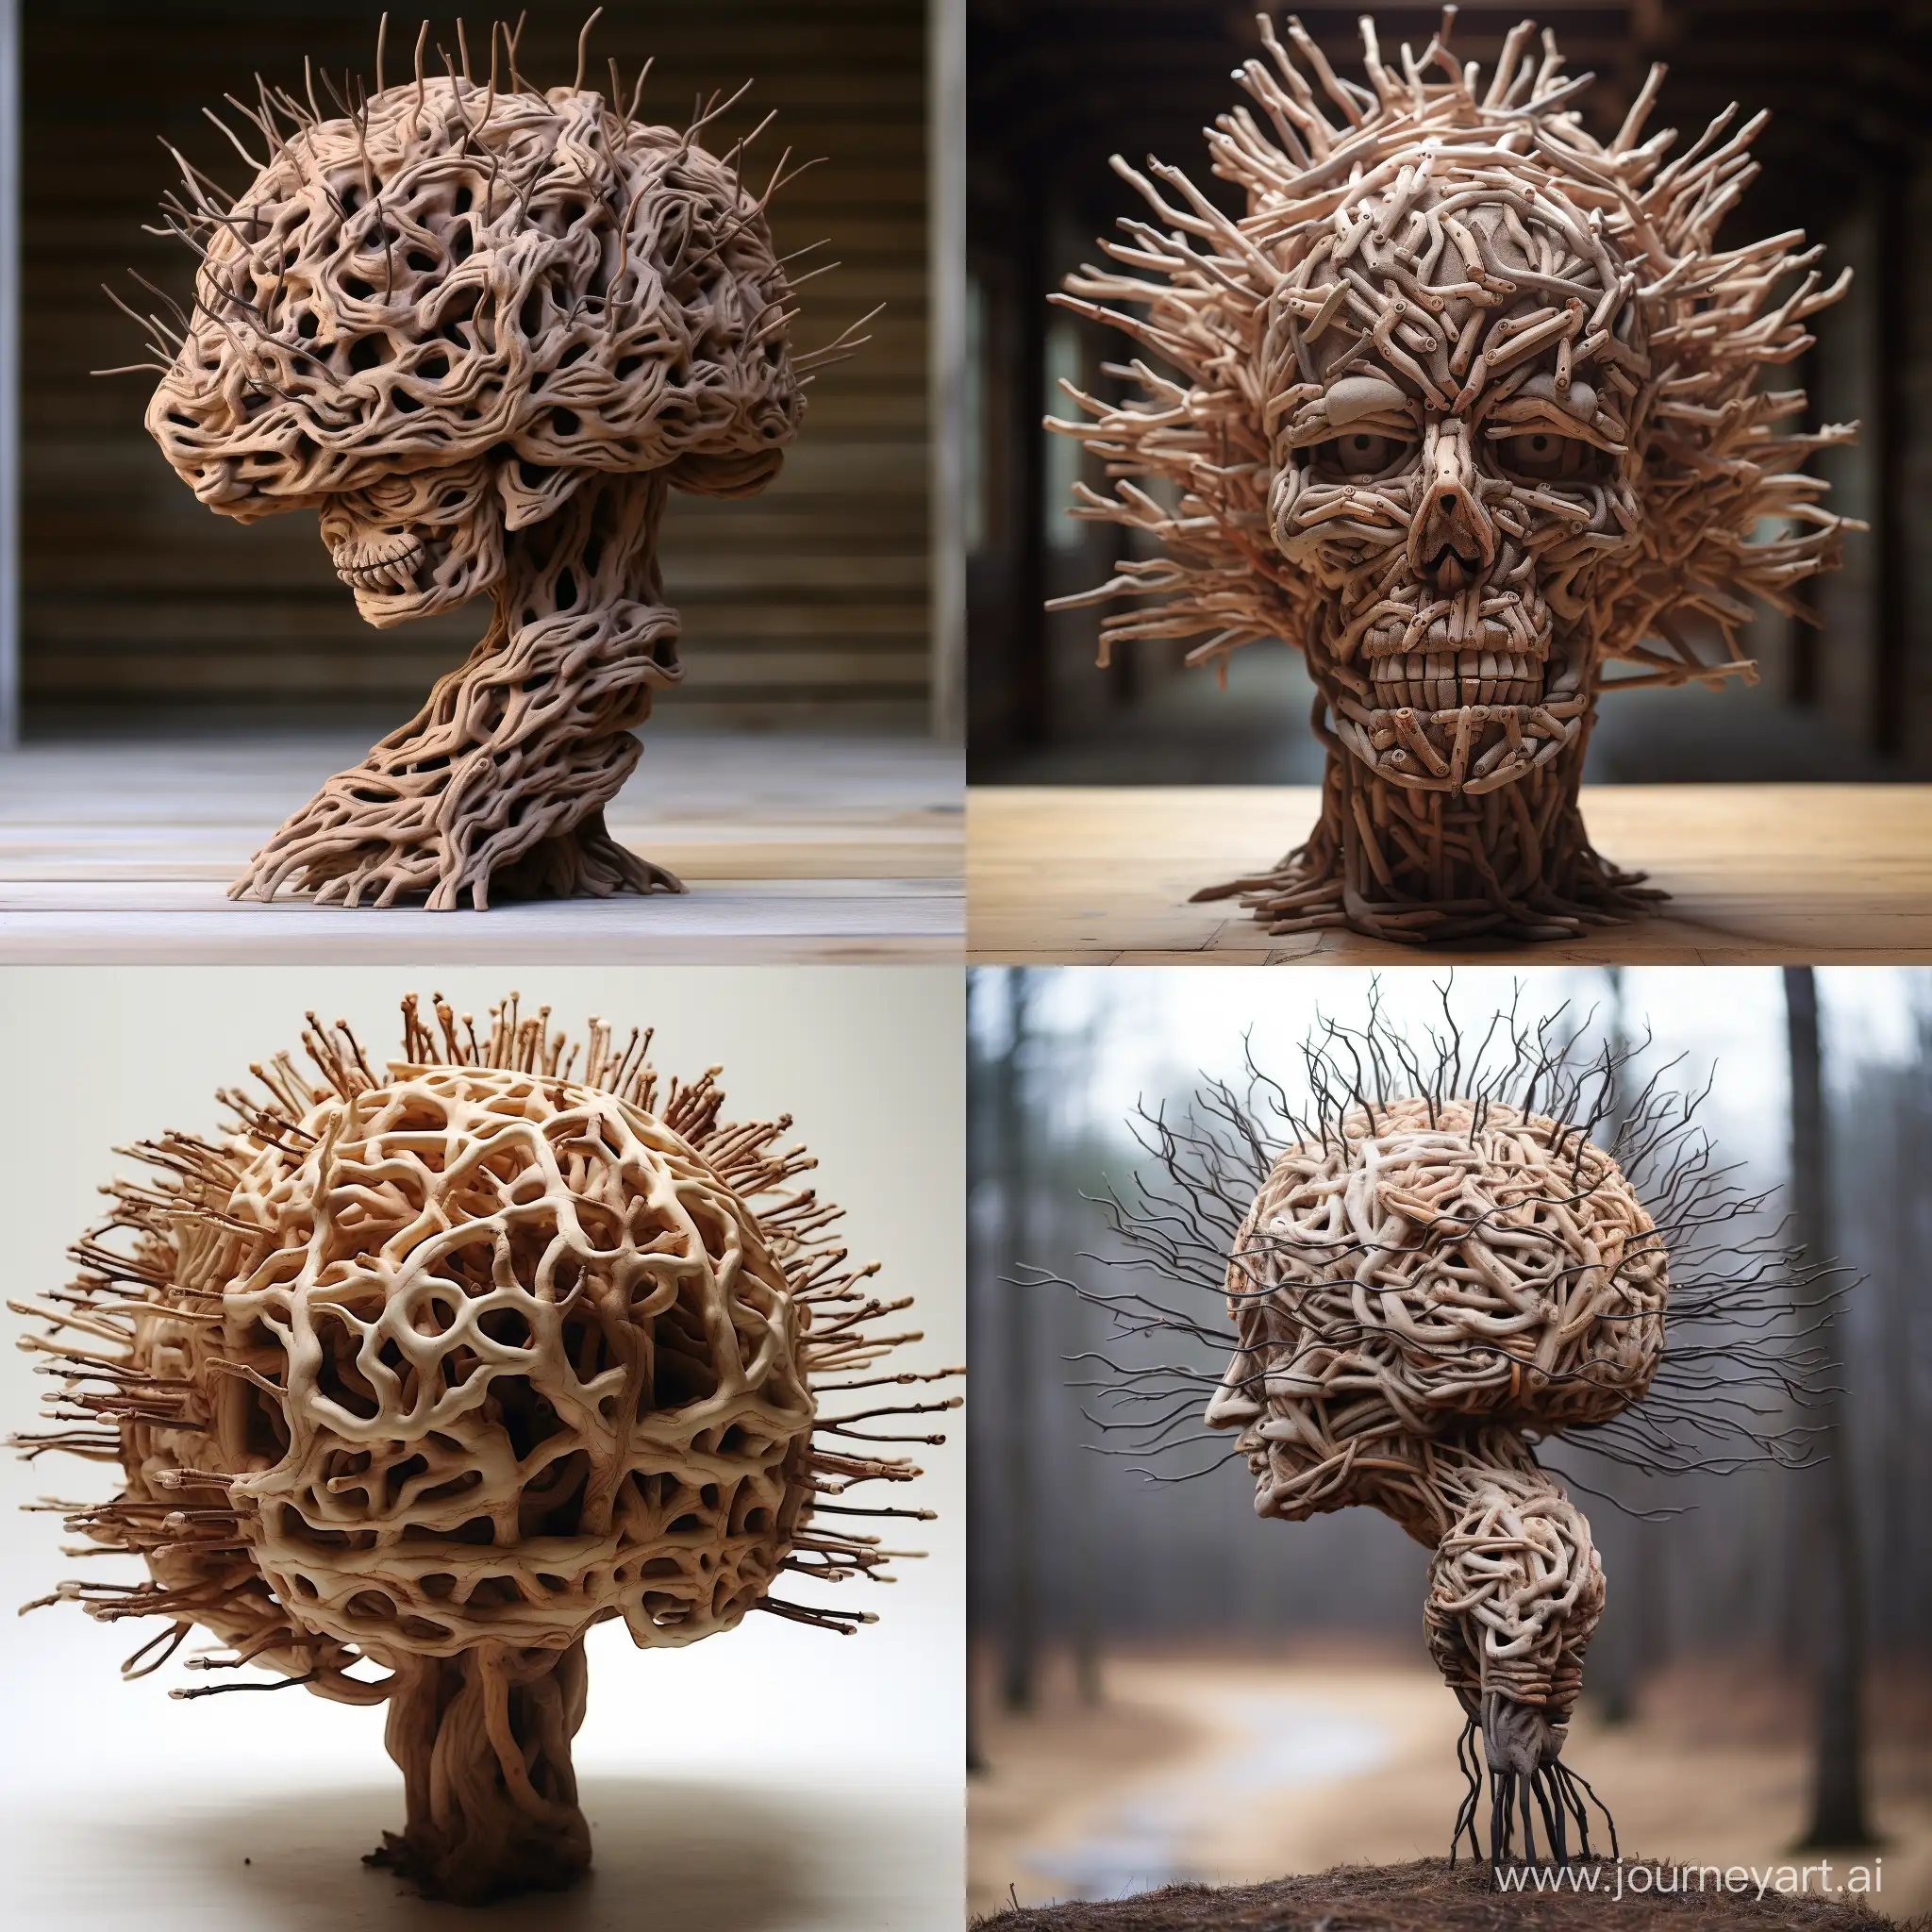 A brain made of sticks